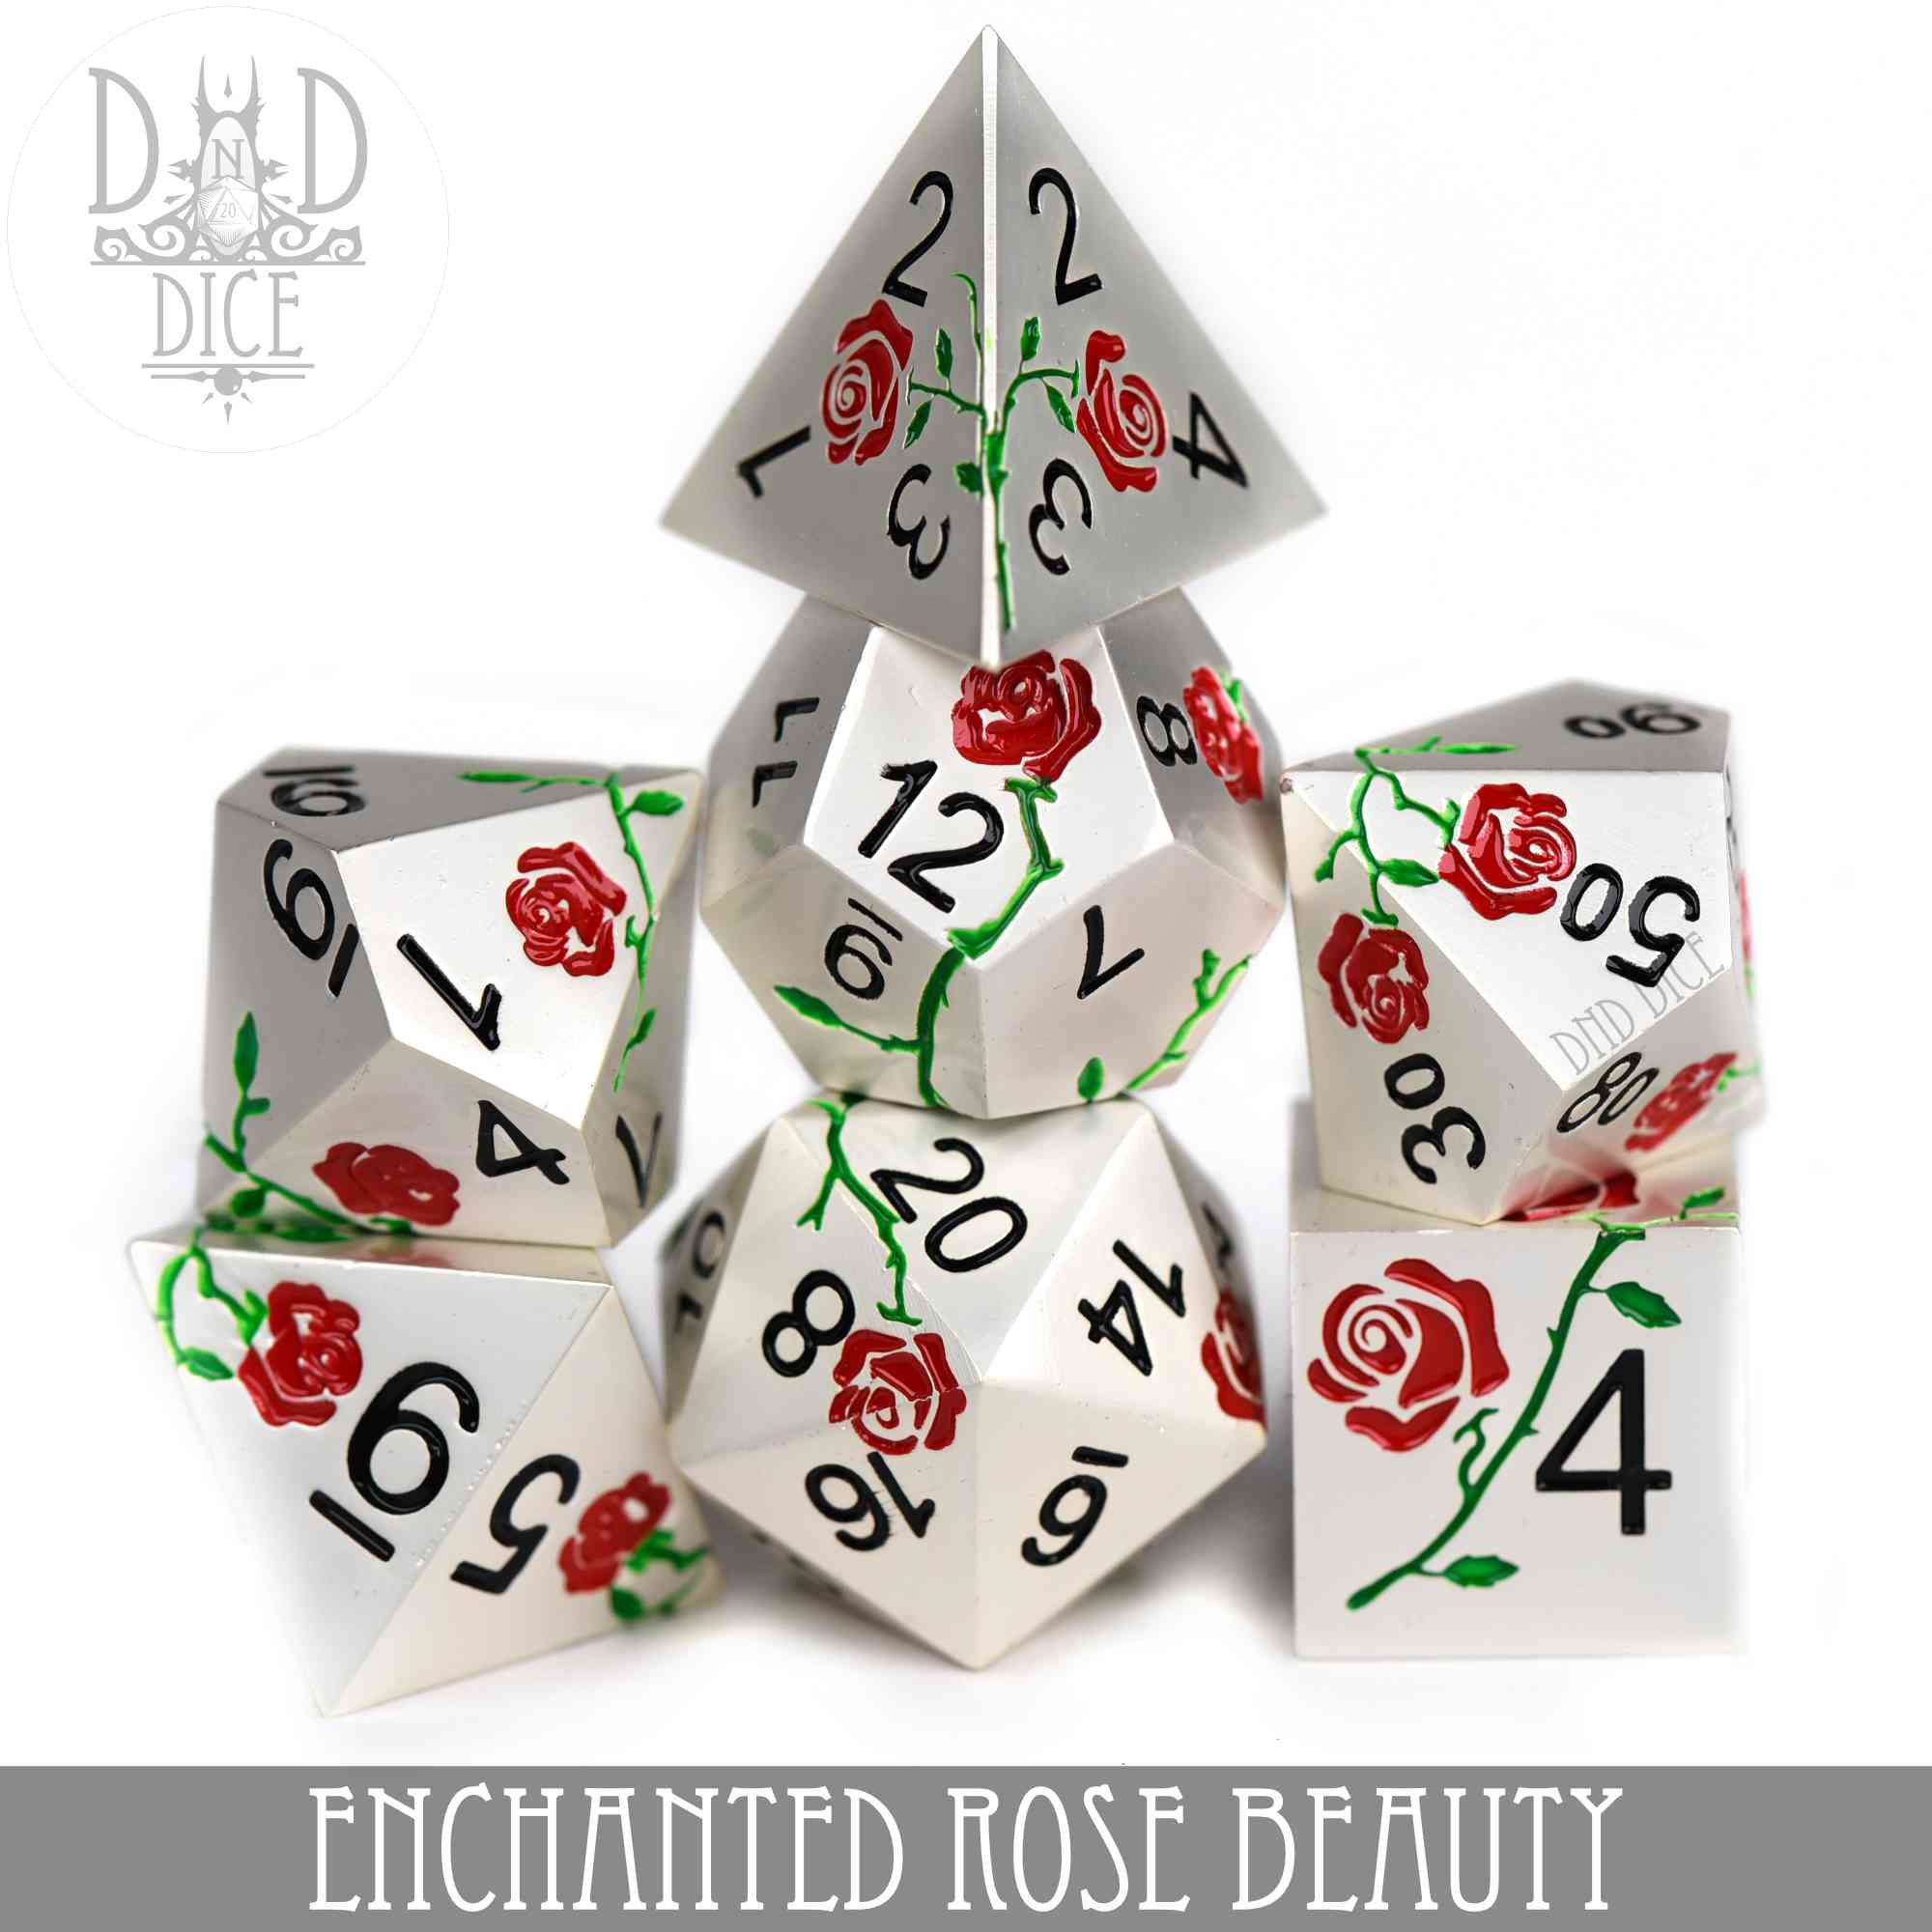 Enchanted Rose: Beauty - Metal Dice Set